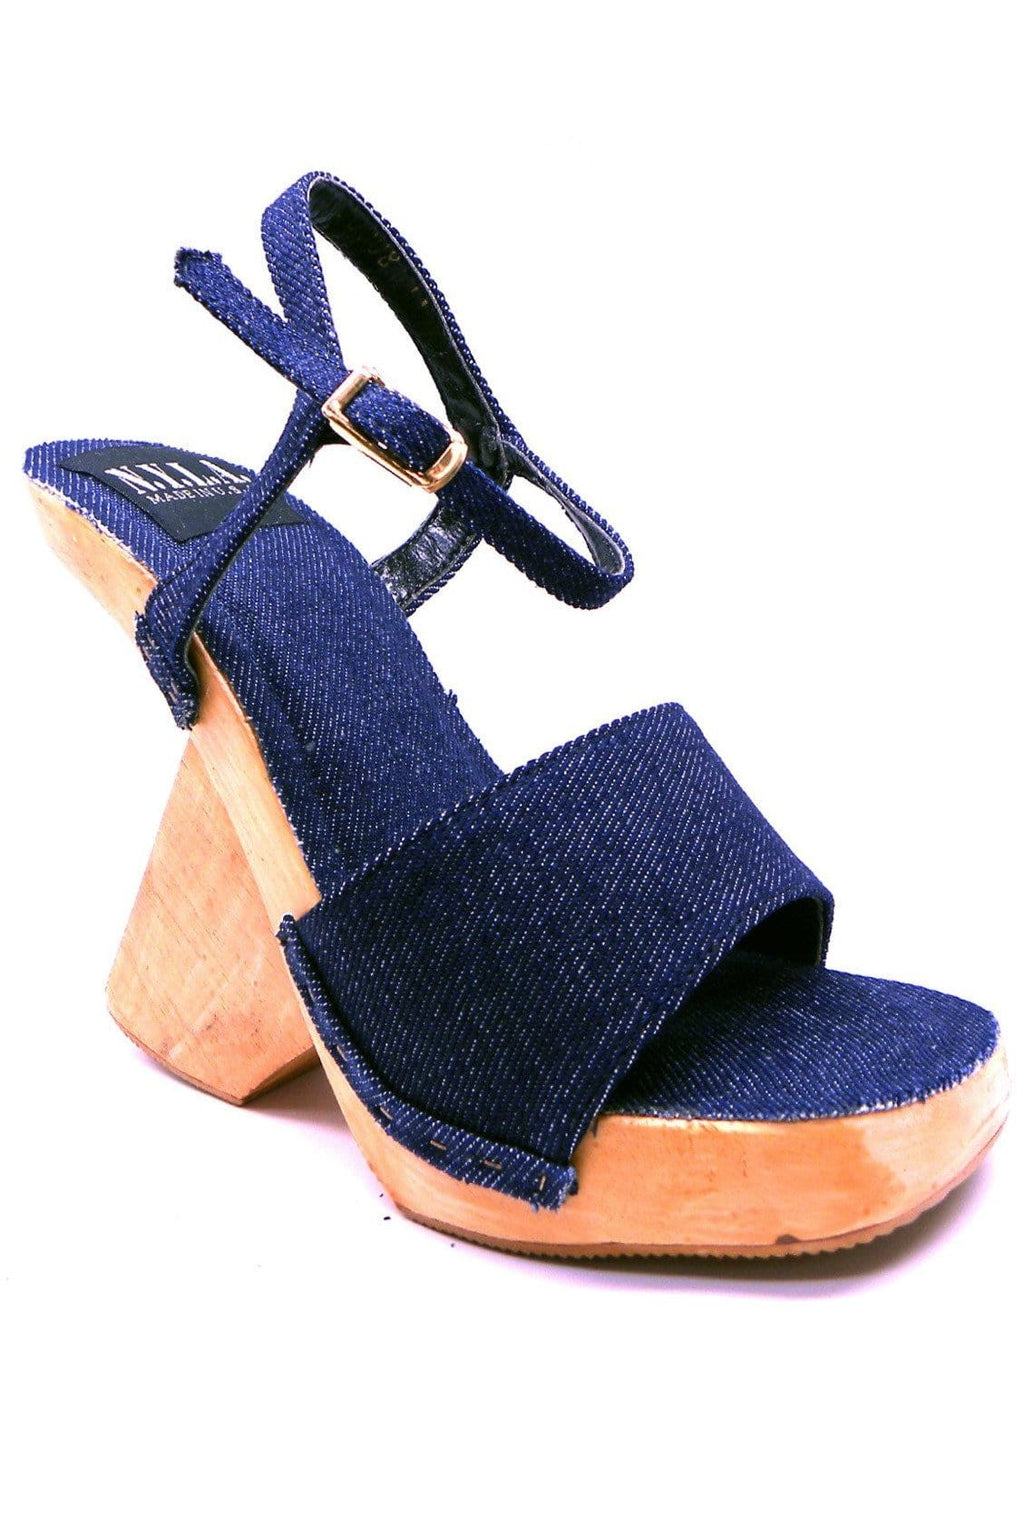 N.Y.L.A. SHOES HEELS N.Y.L.A. Shoes Bevie Blue Denim on Wood Platform Women's Sandals